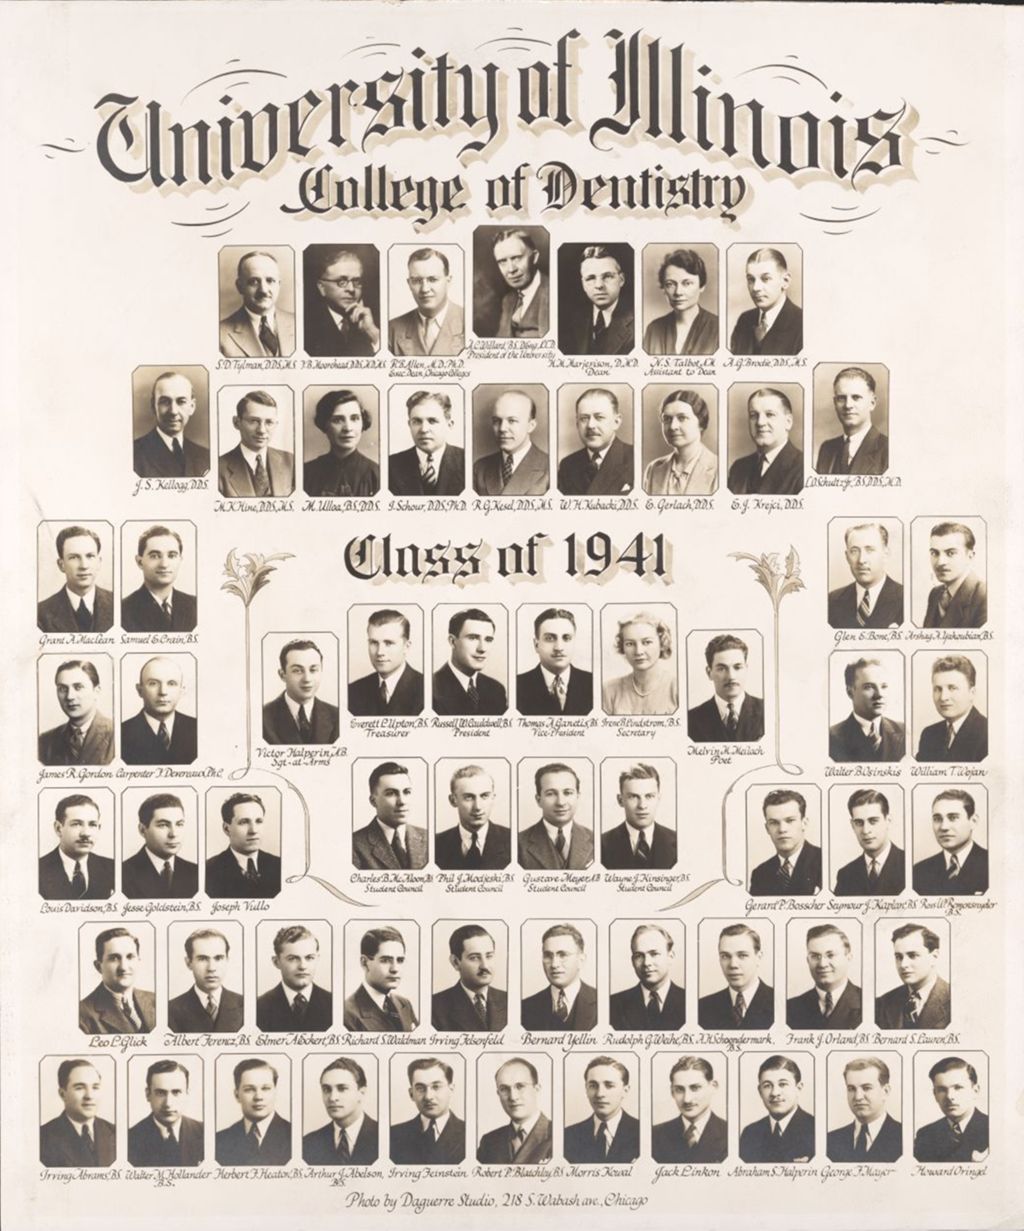 1941 graduating class, University of Illinois College of Dentistry